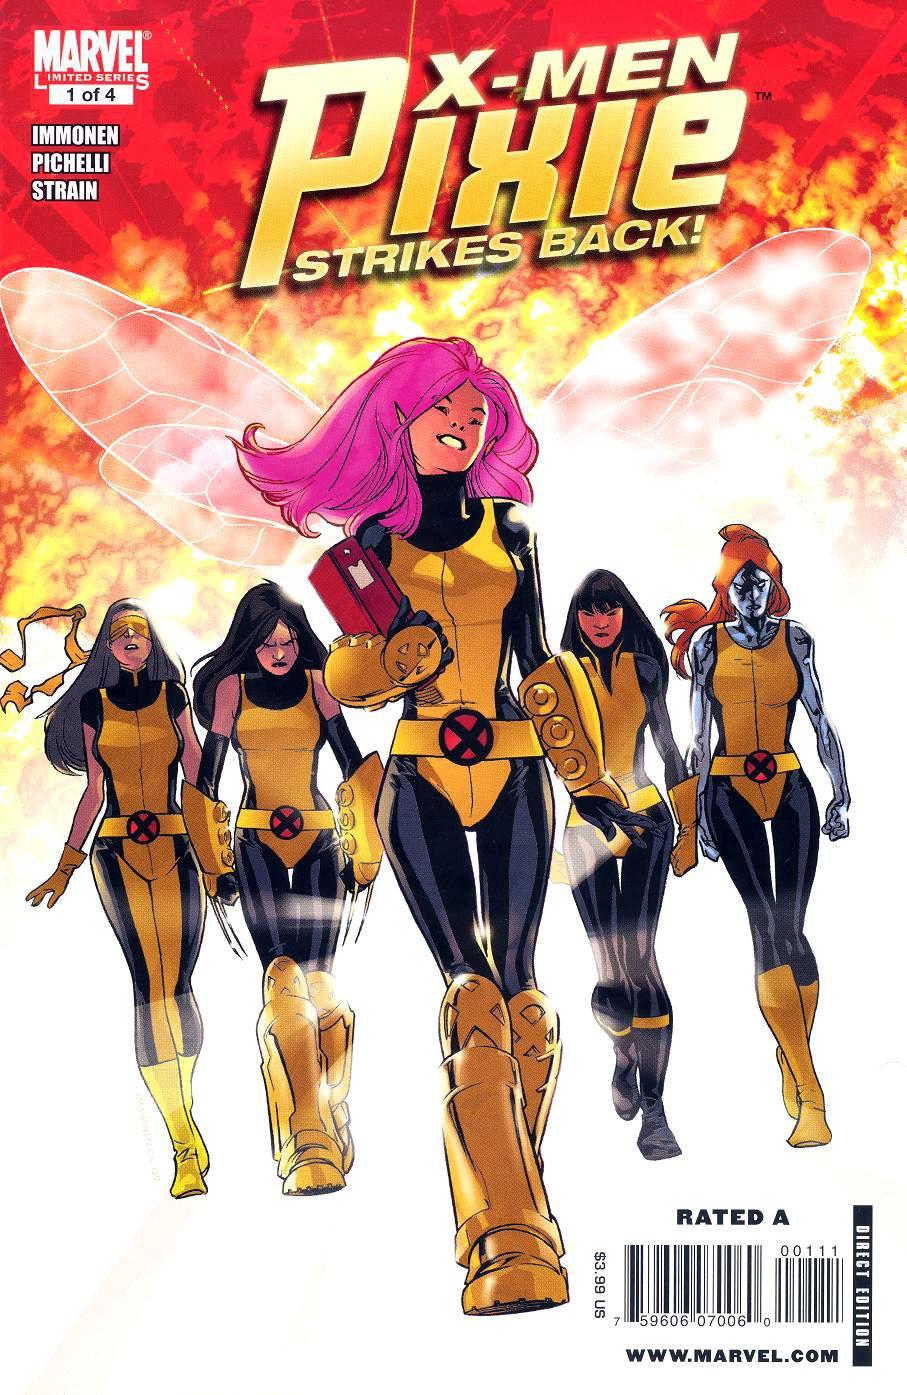 X-Men: Pixie Strikes Back Vol. 1 #1